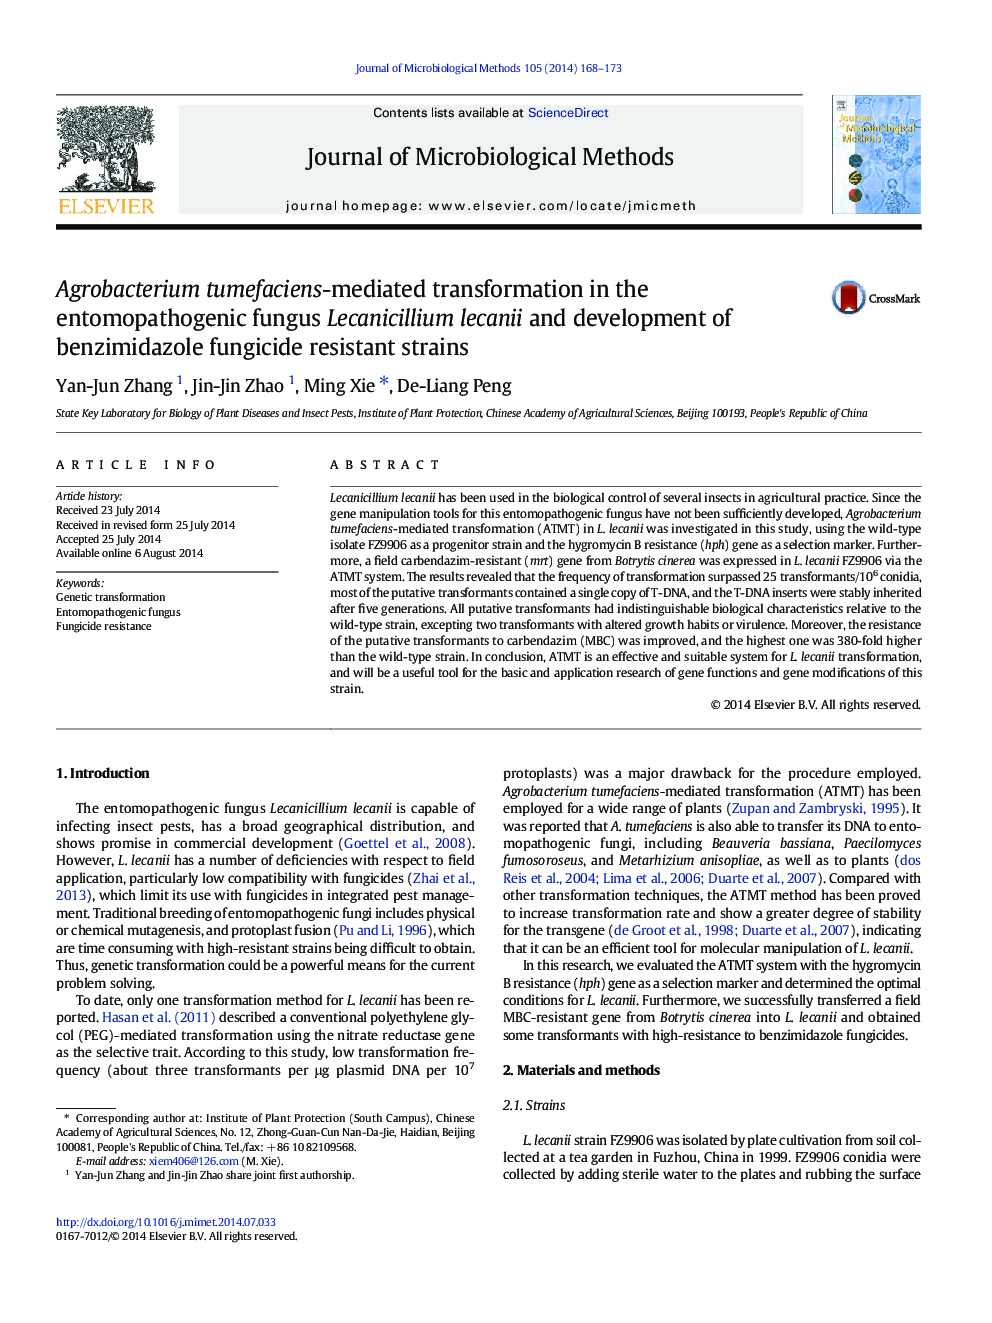 Agrobacterium tumefaciens-mediated transformation in the entomopathogenic fungus Lecanicillium lecanii and development of benzimidazole fungicide resistant strains